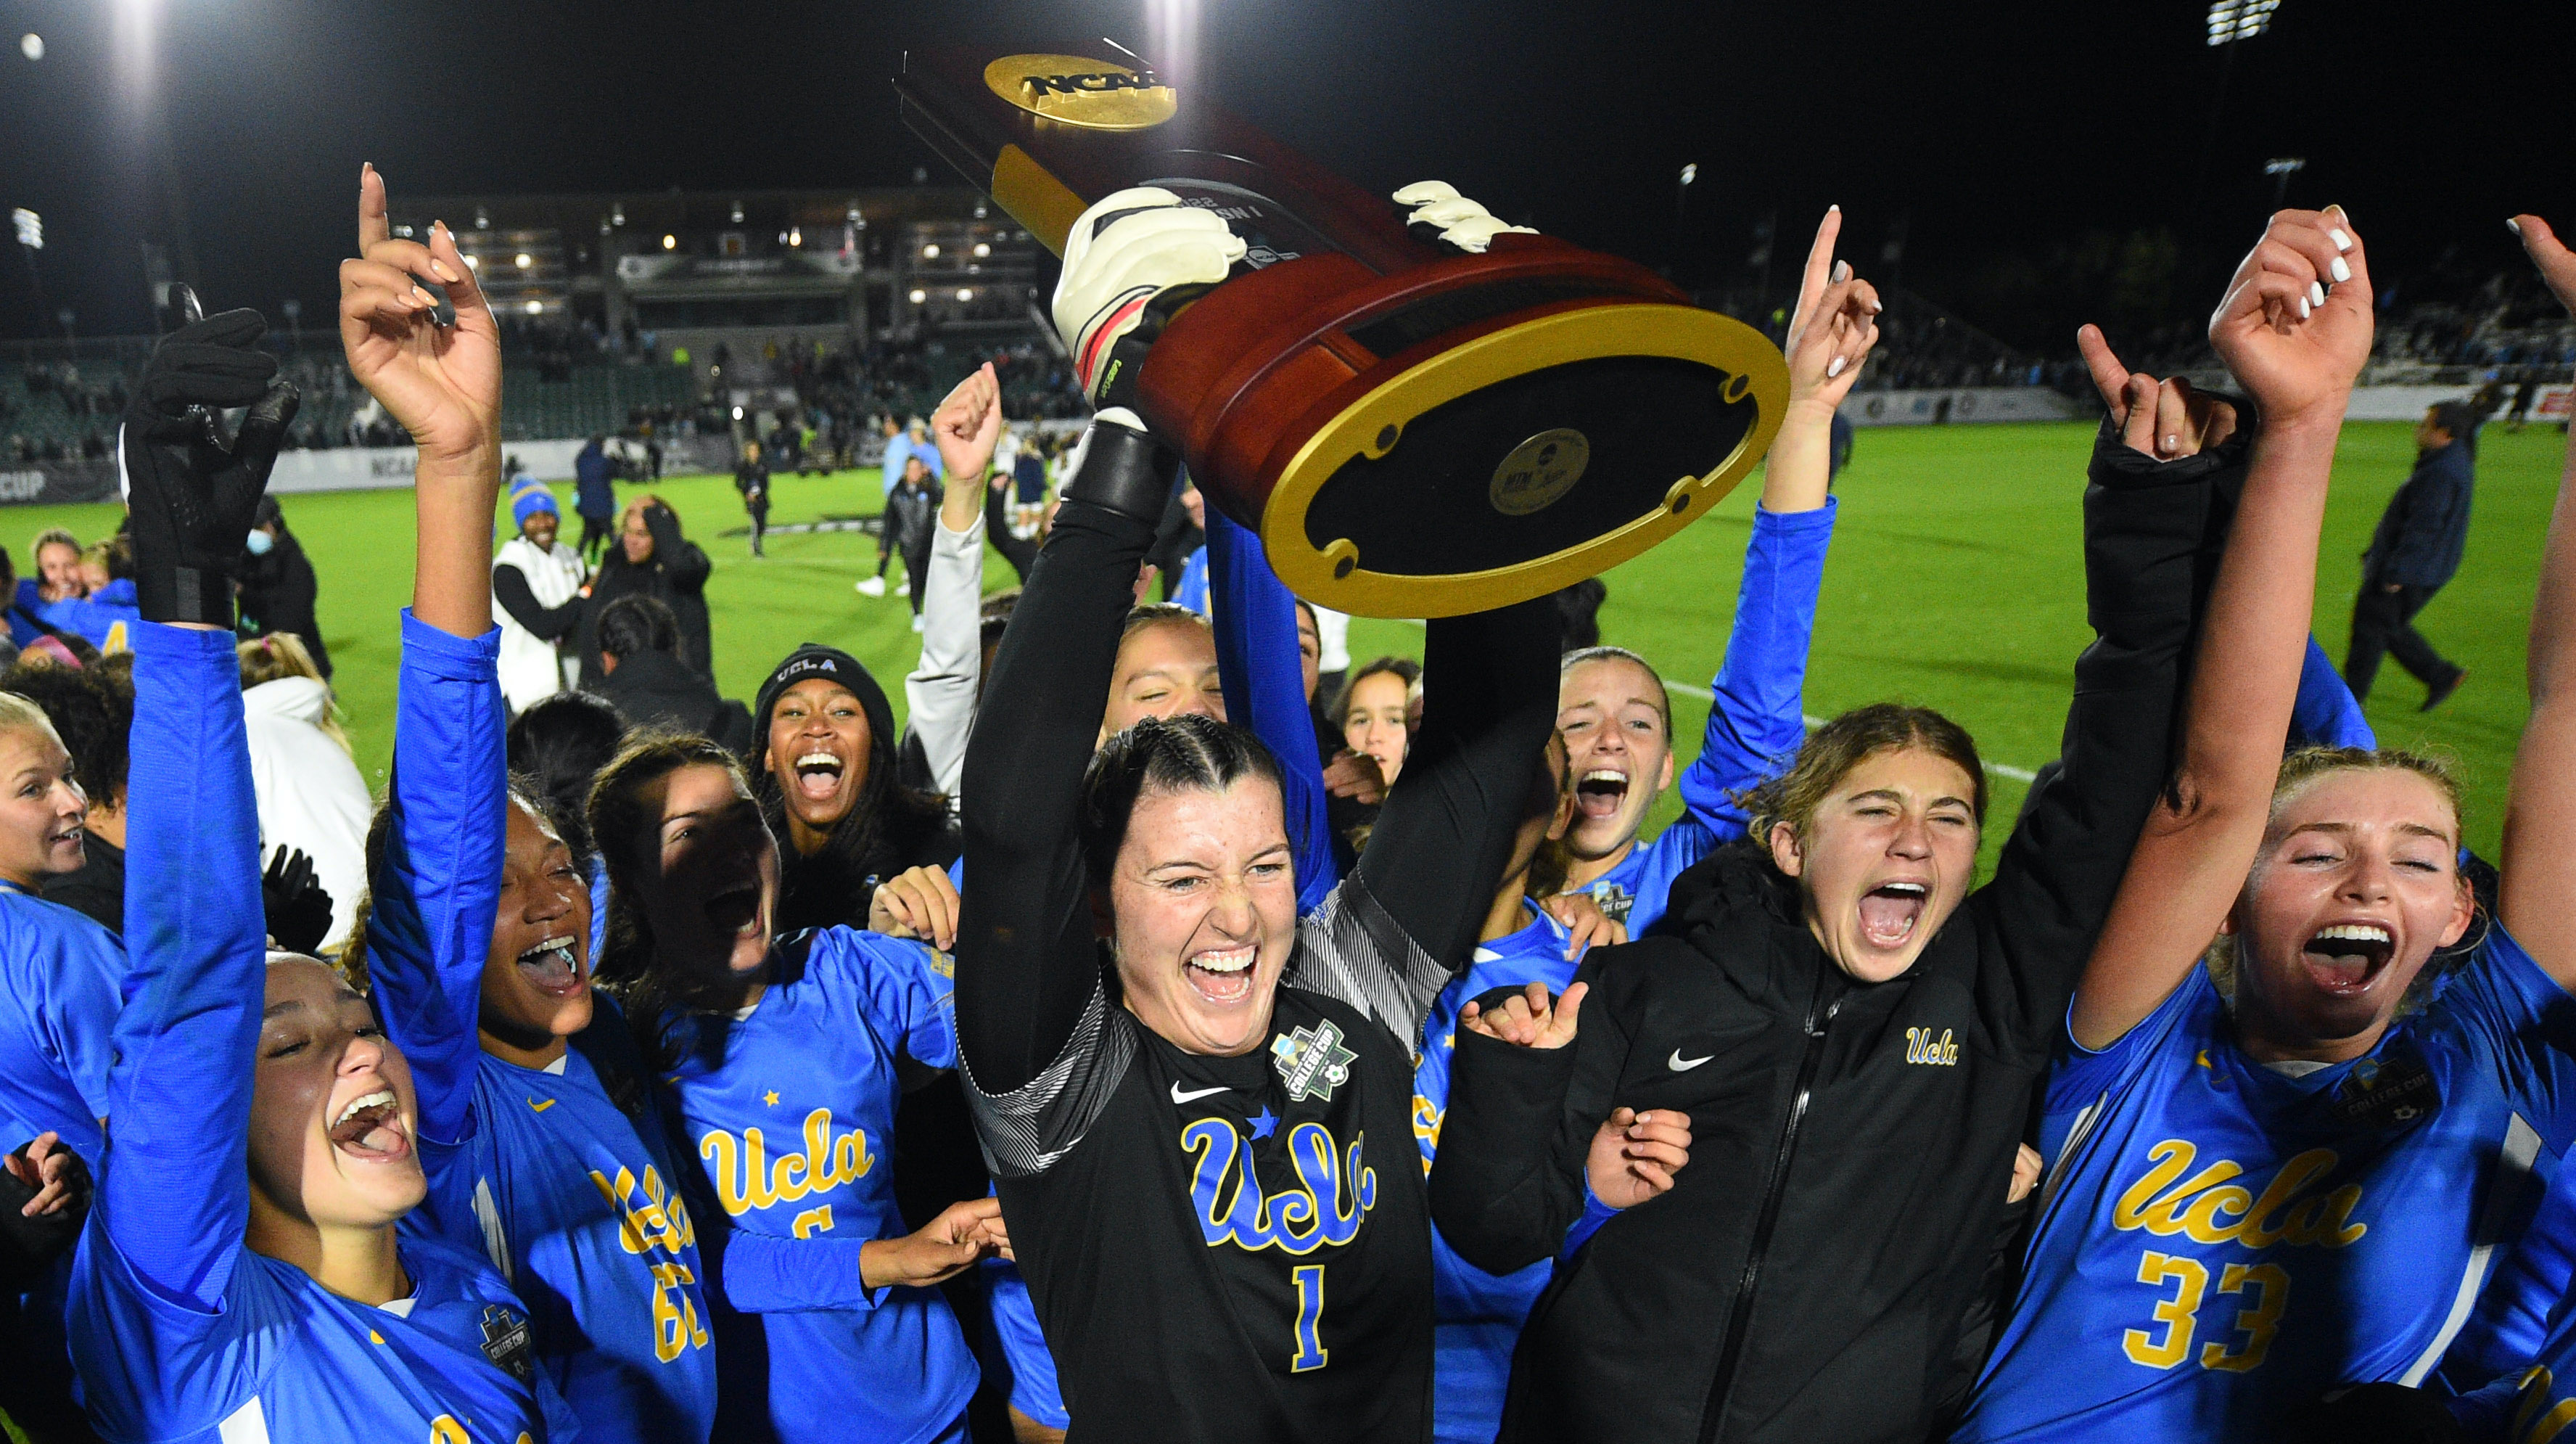 UCLA Women's Soccer Beats UNC in College Cup Final, Wins NCAA Title